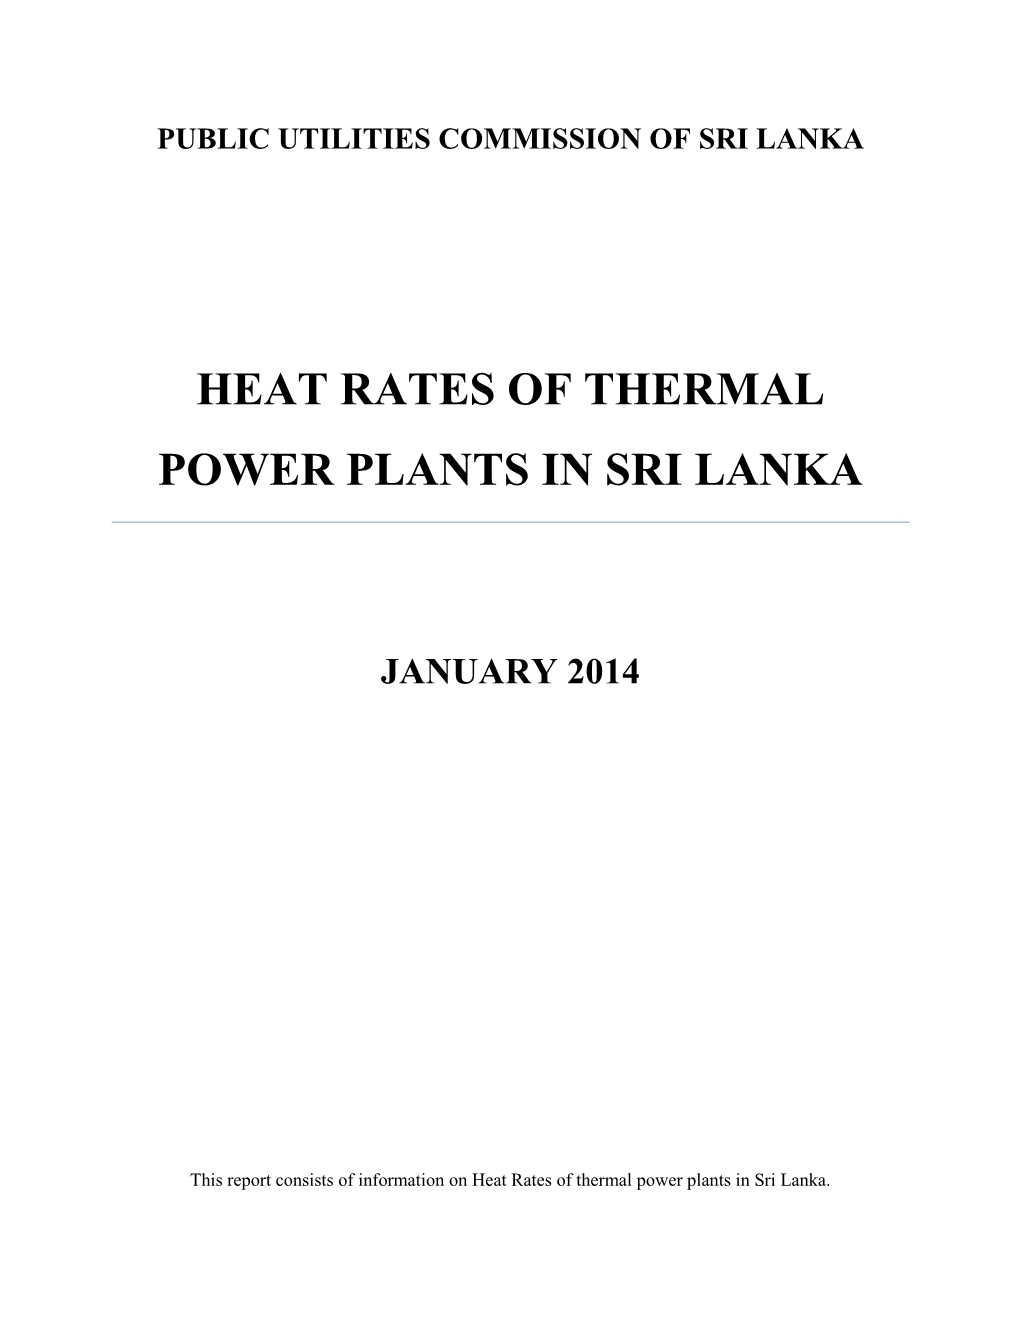 Heat Rates of Thermal Power Plants in Sri Lanka